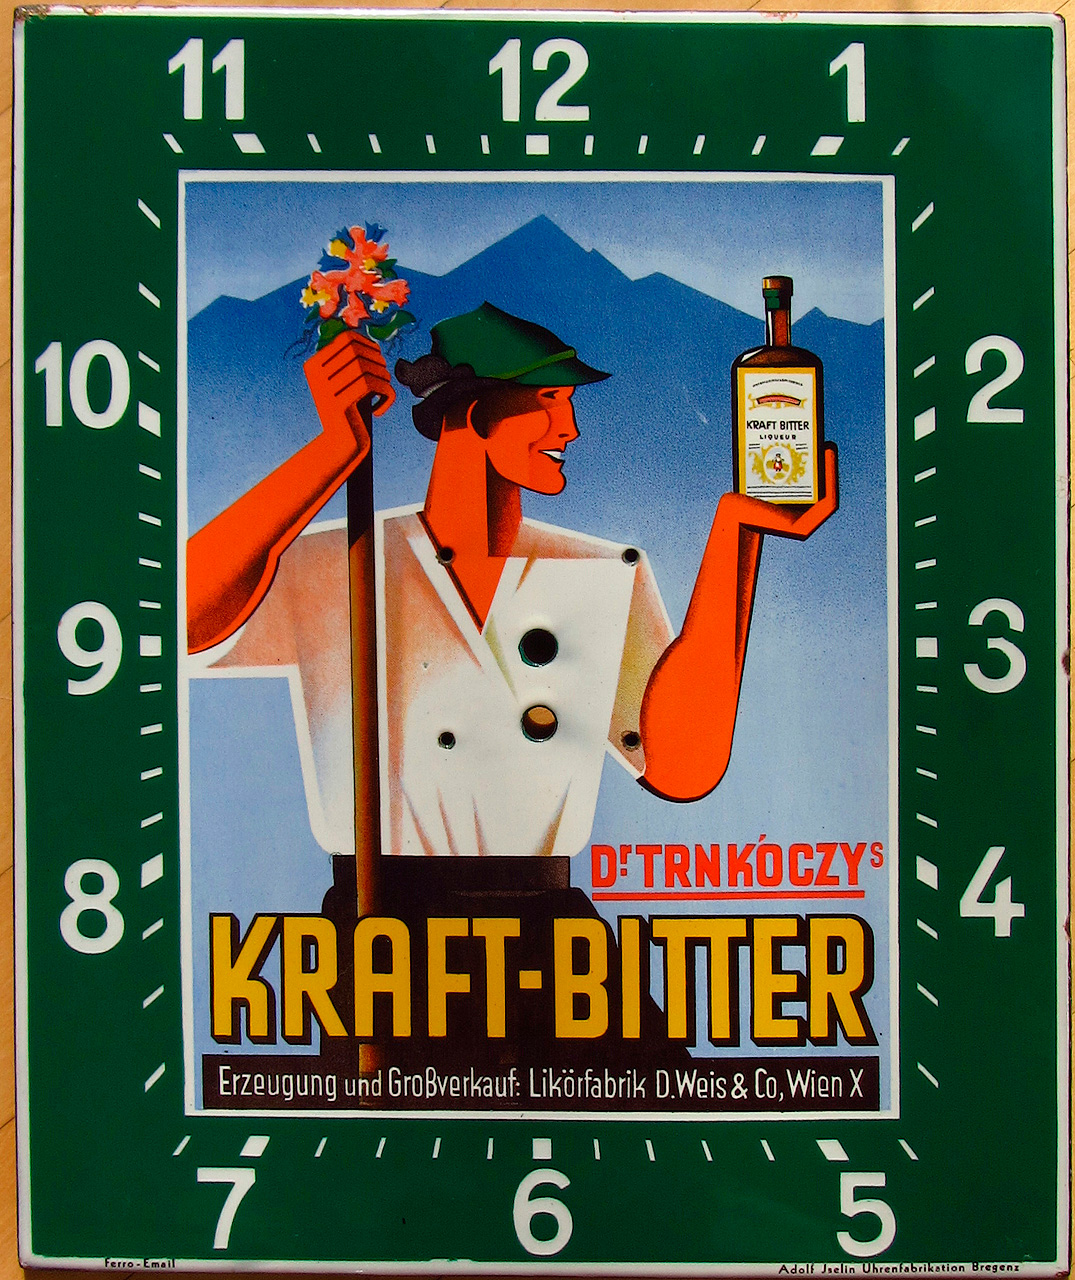 Kraft-Bitter